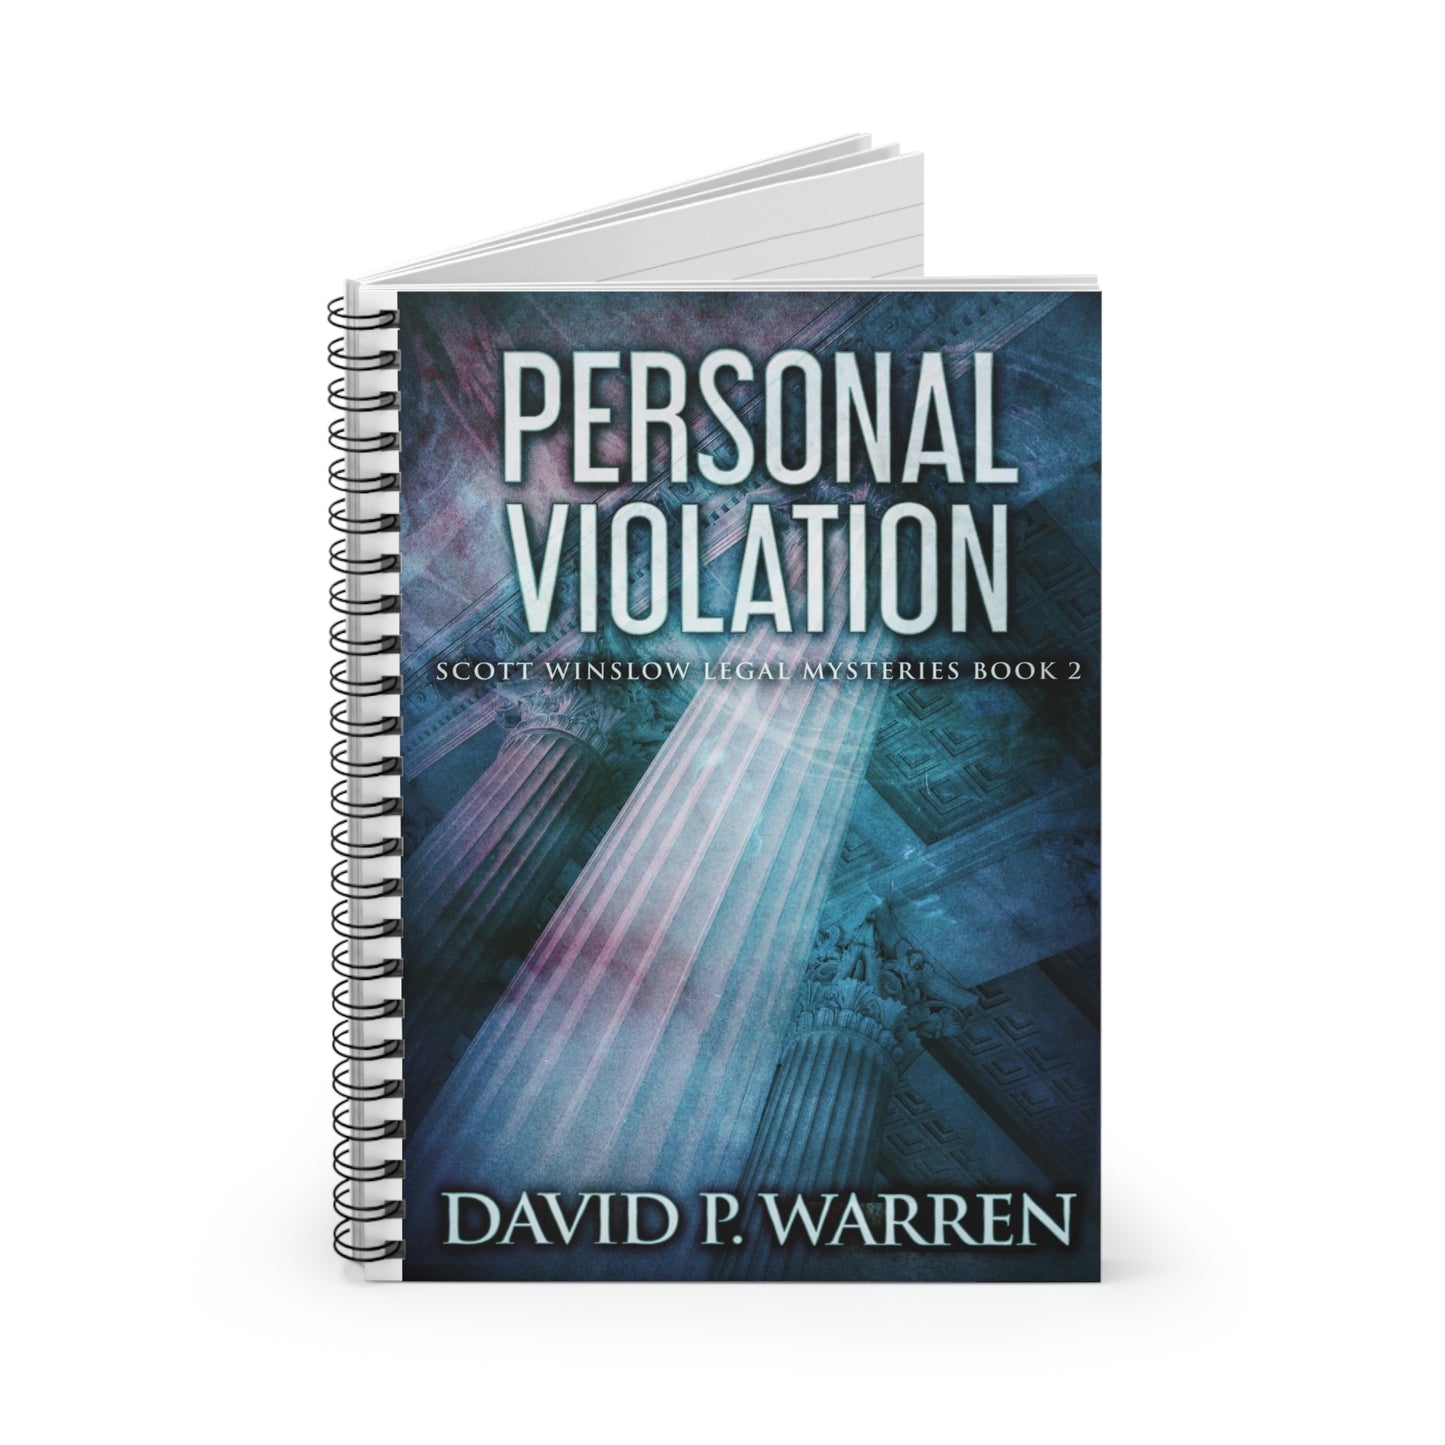 Personal Violation - Spiral Notebook